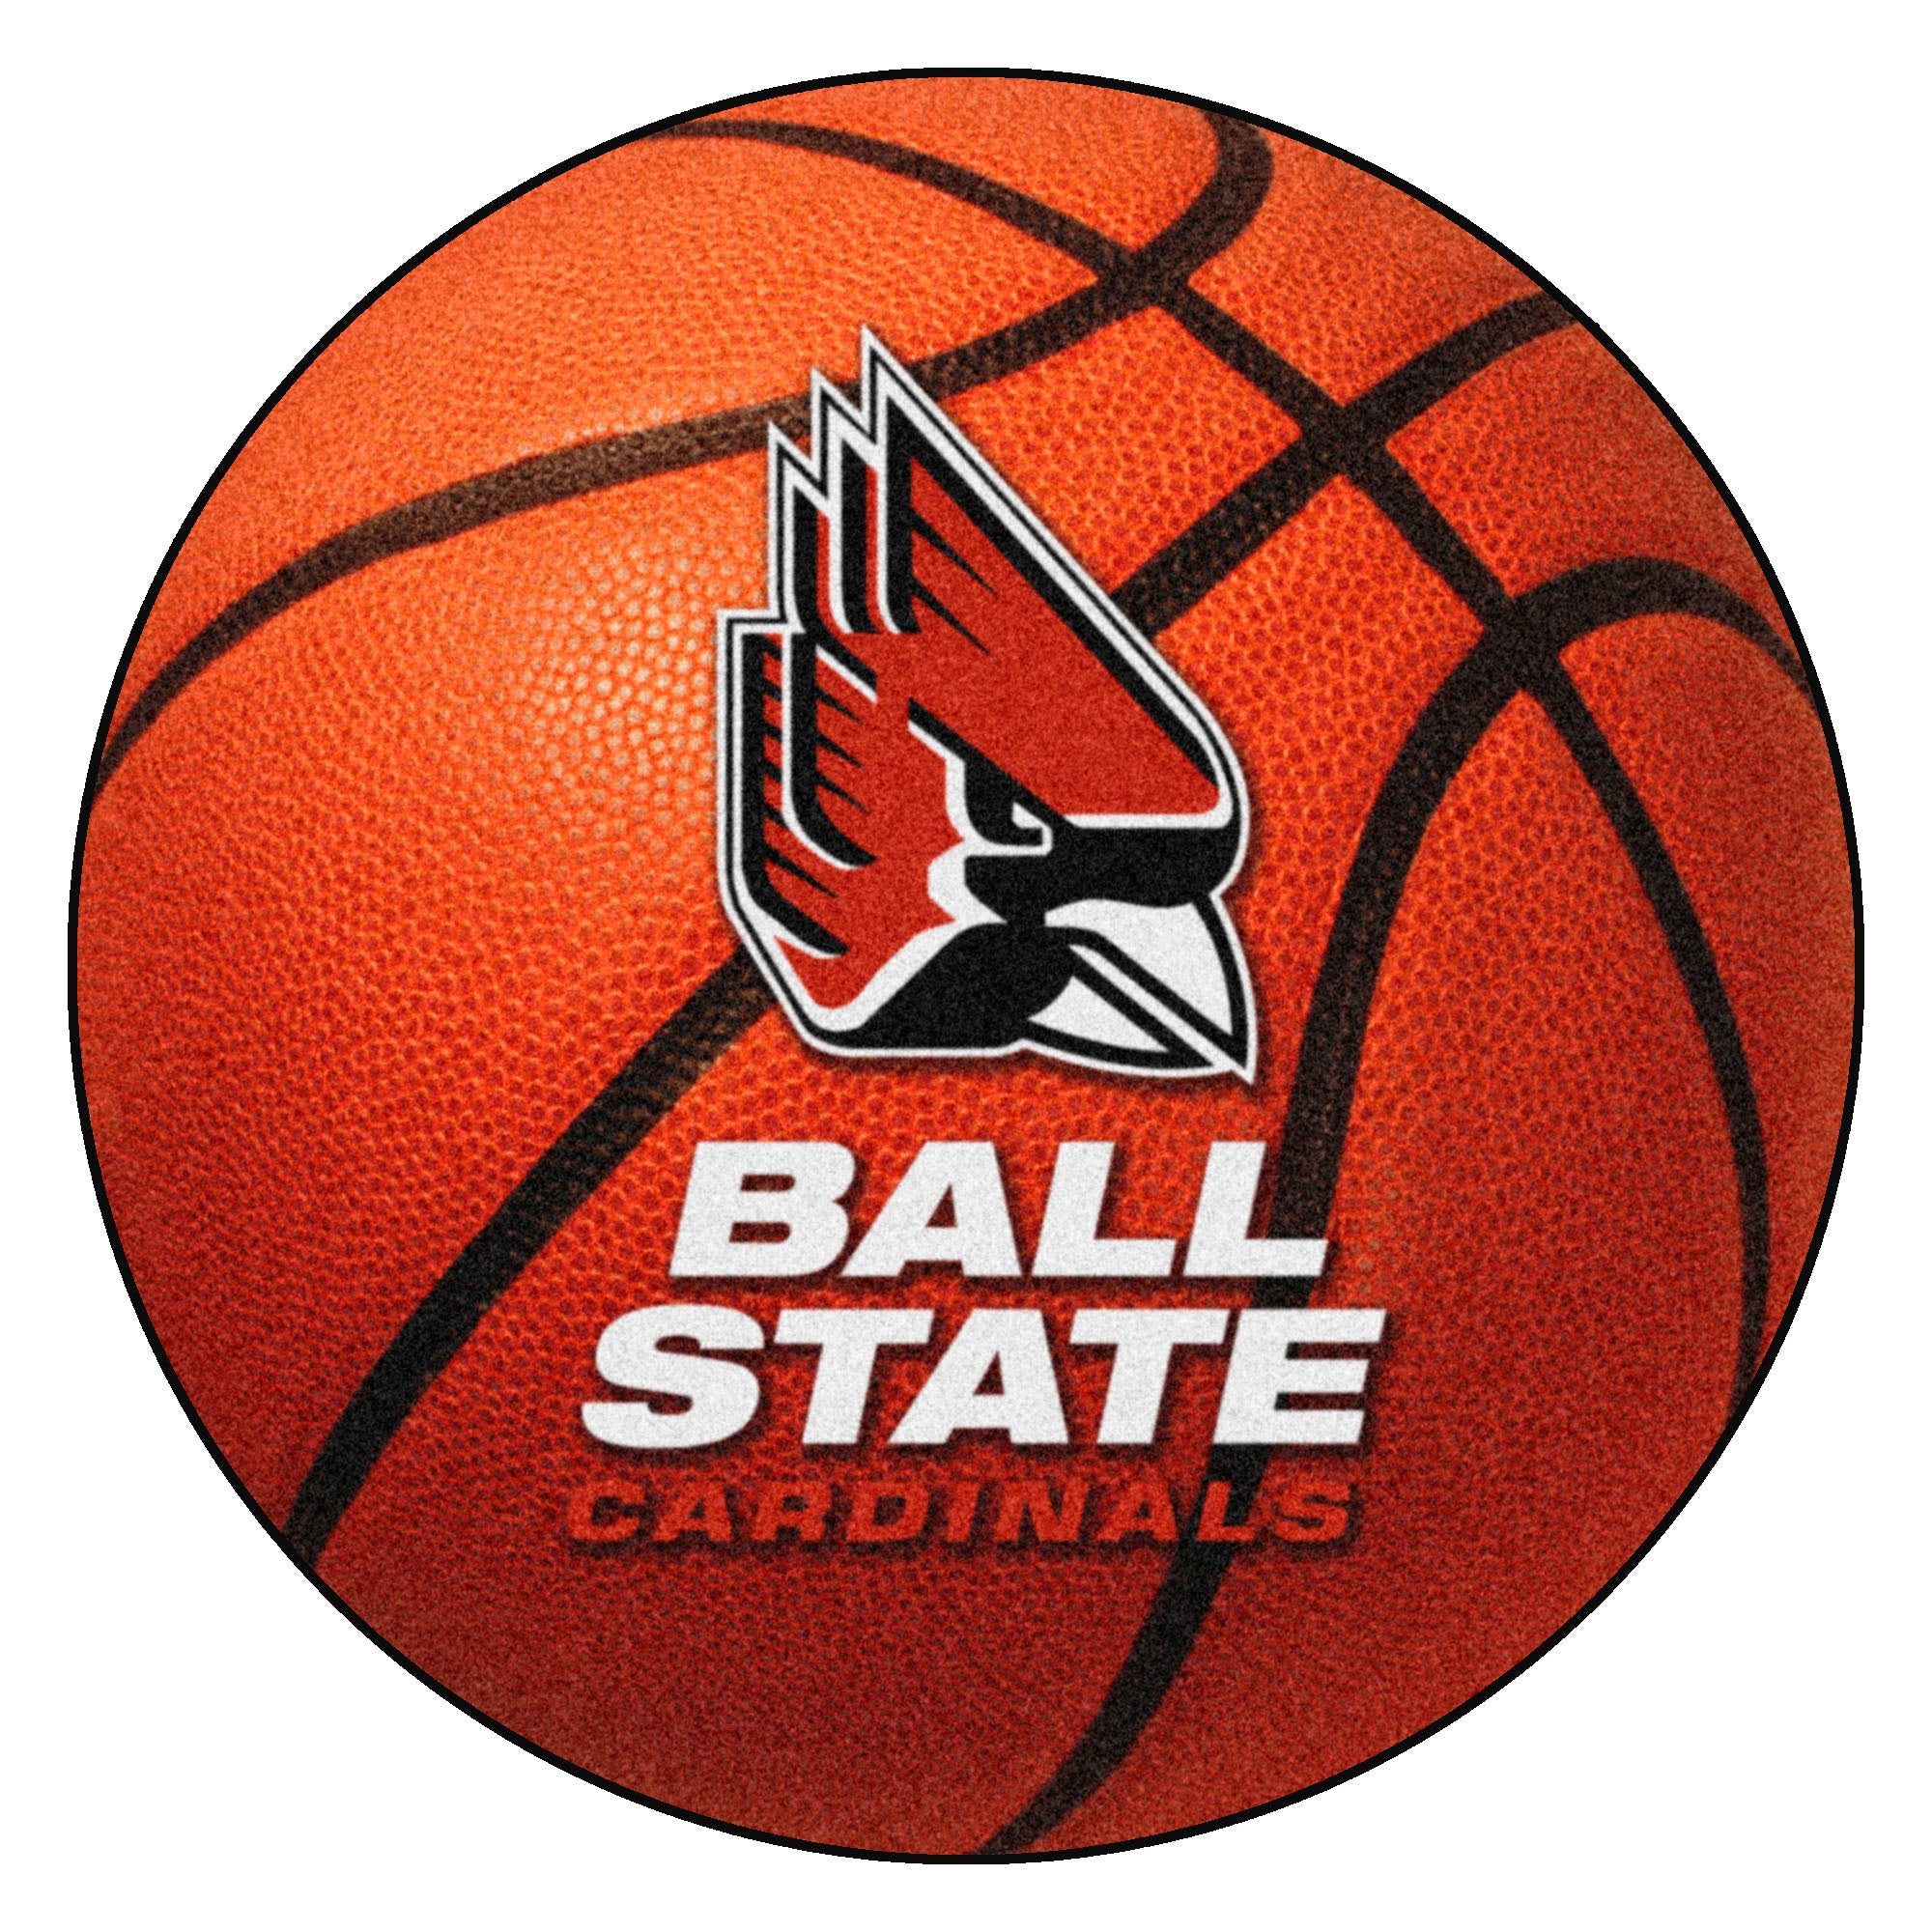 FANMATS, Ball State University Basketball Rug - 27in. Diameter